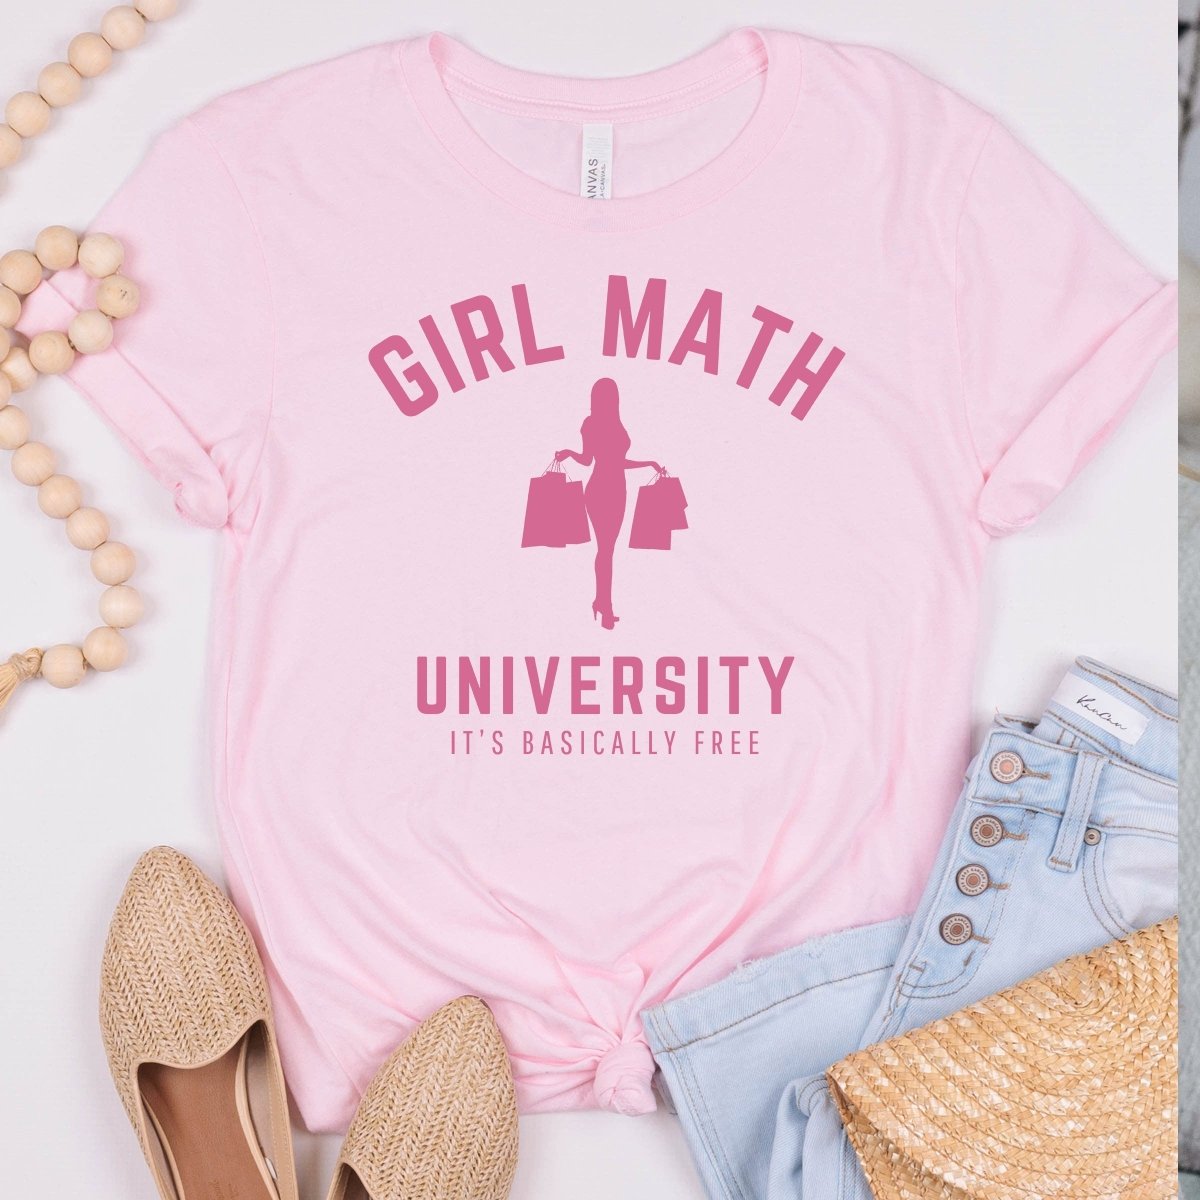 Girl Math University Wholesale tee - Limeberry Designs